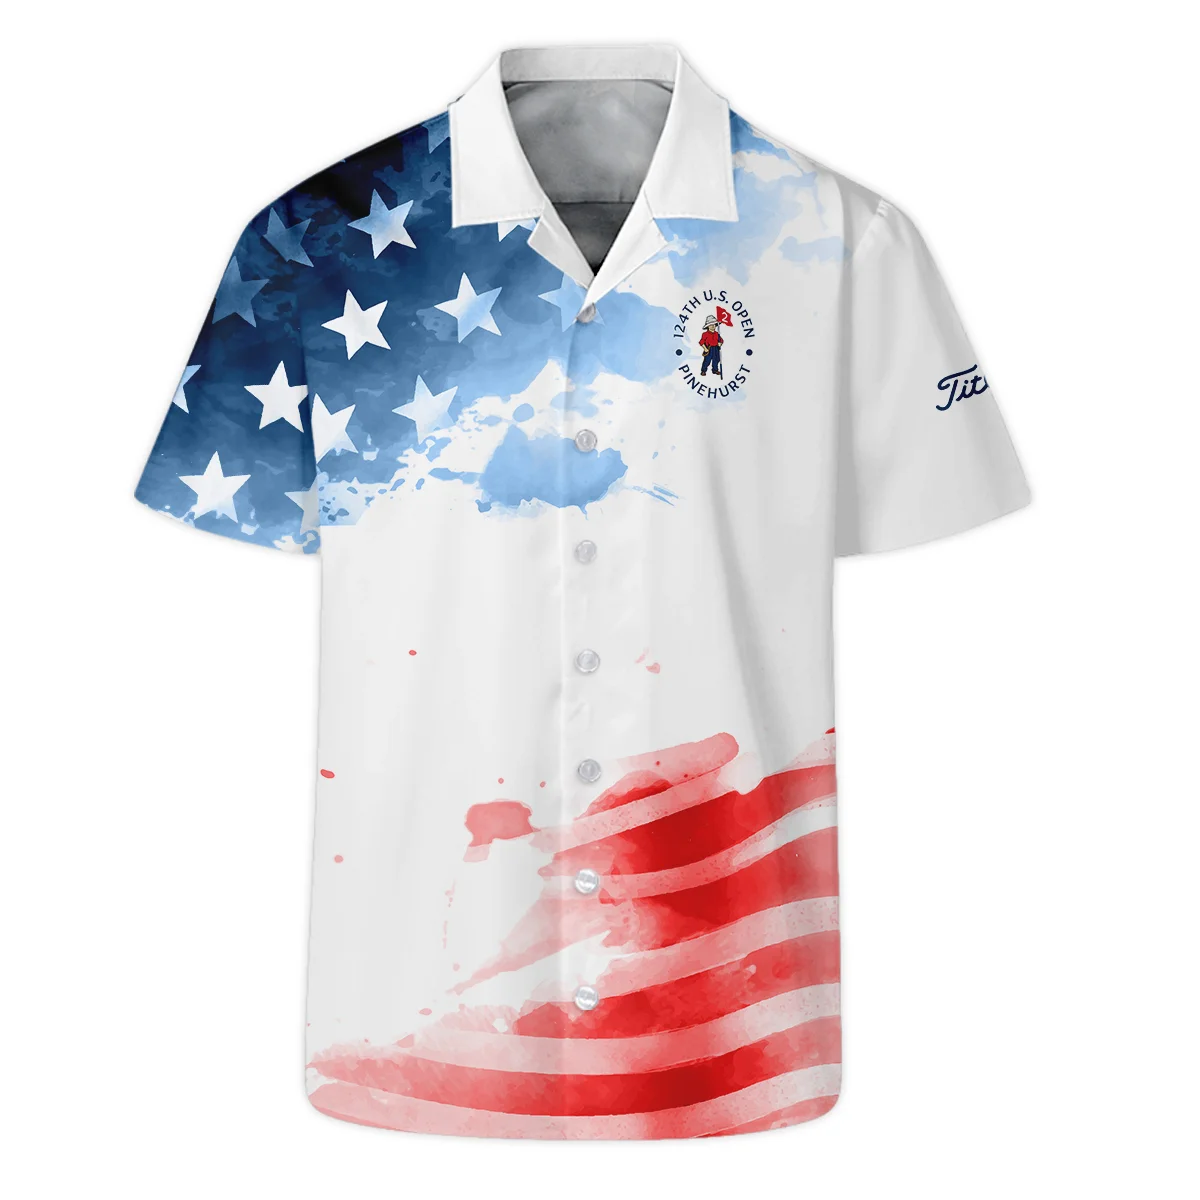 Golf 124th U.S. Open Pinehurst Titleist Unisex Sweatshirt US Flag Watercolor Golf Sports All Over Print Sweatshirt